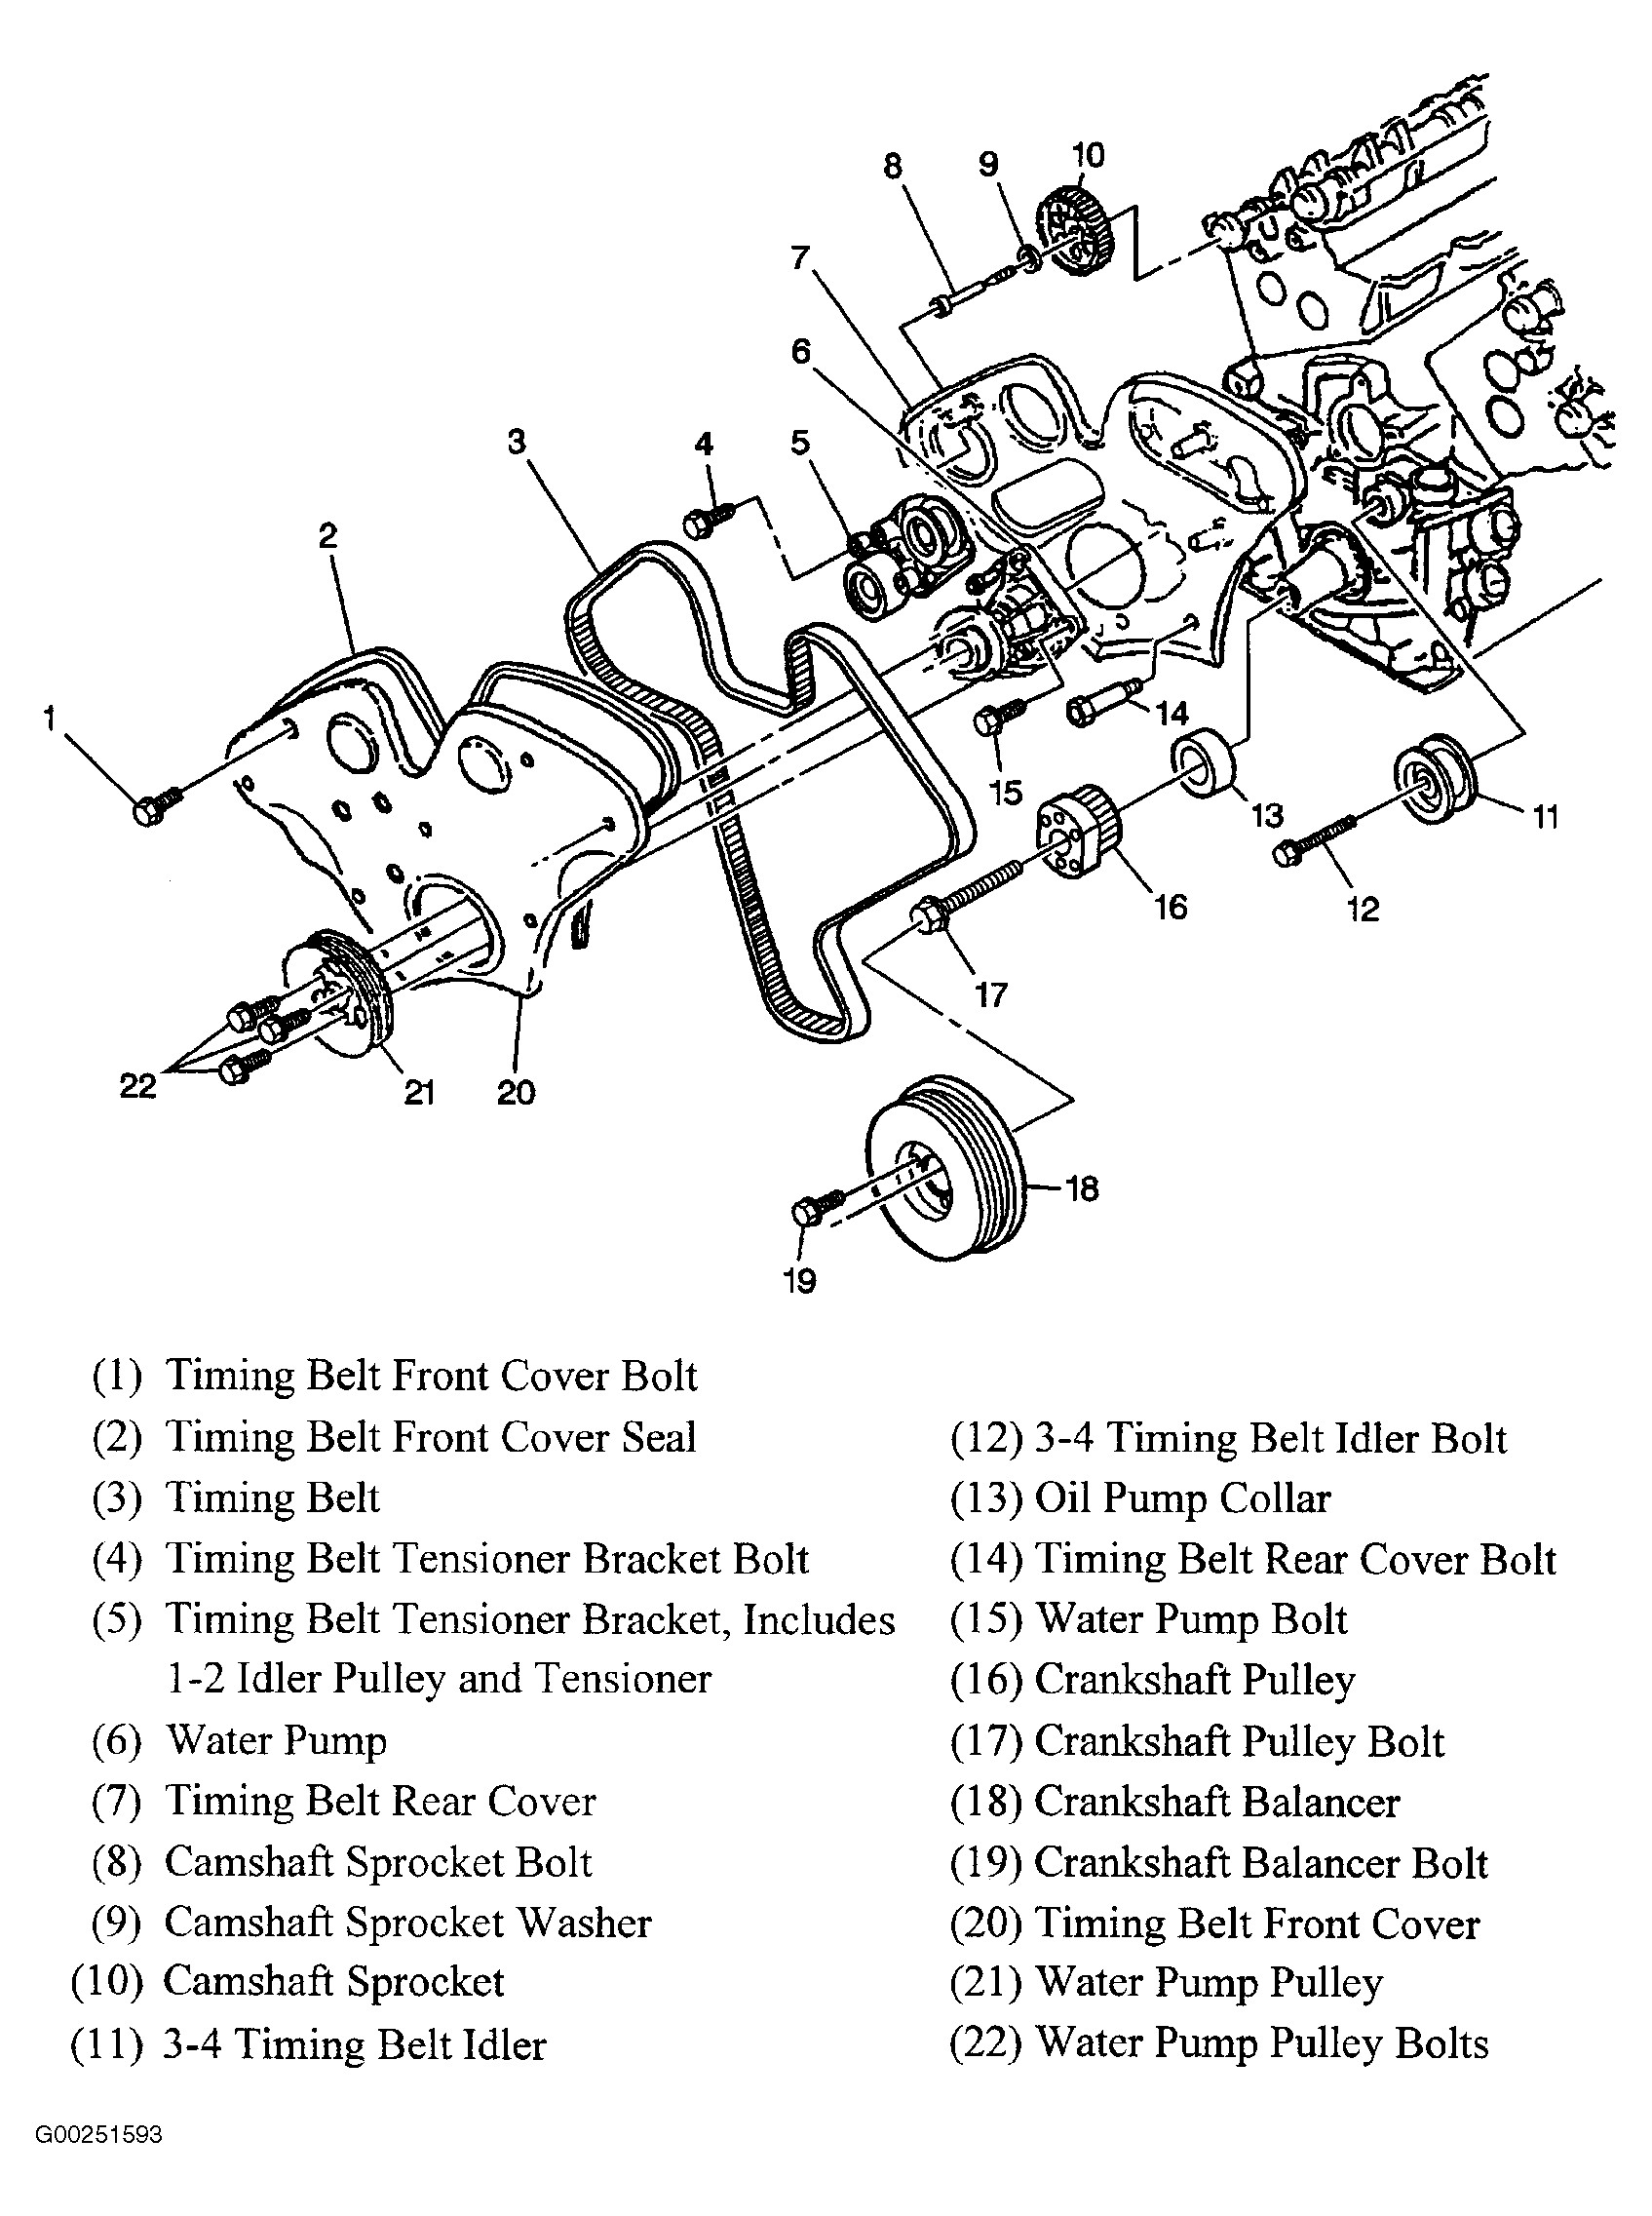 Car Front End Parts Diagram 2003 Cadillac Cts Serpentine Belt Diagram Auto Of Car Front End Parts Diagram